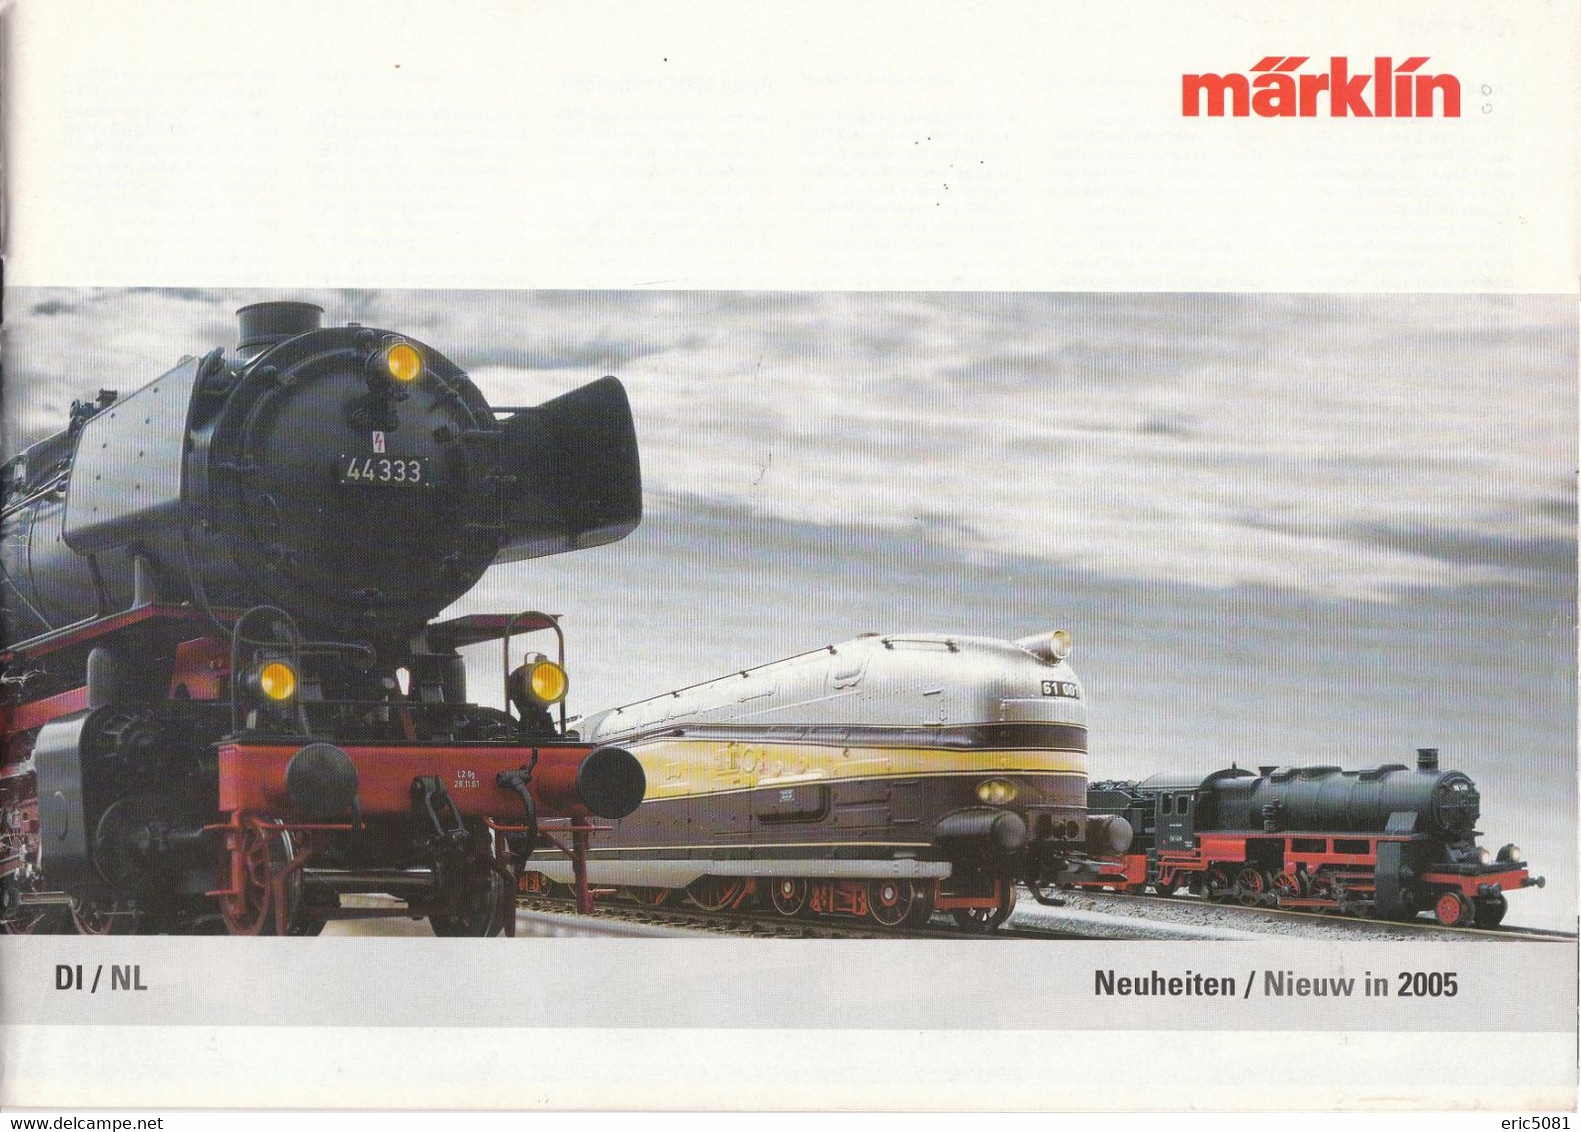 MARKLIN Catalogus 2005 Nederlands/ Duits - Dutch